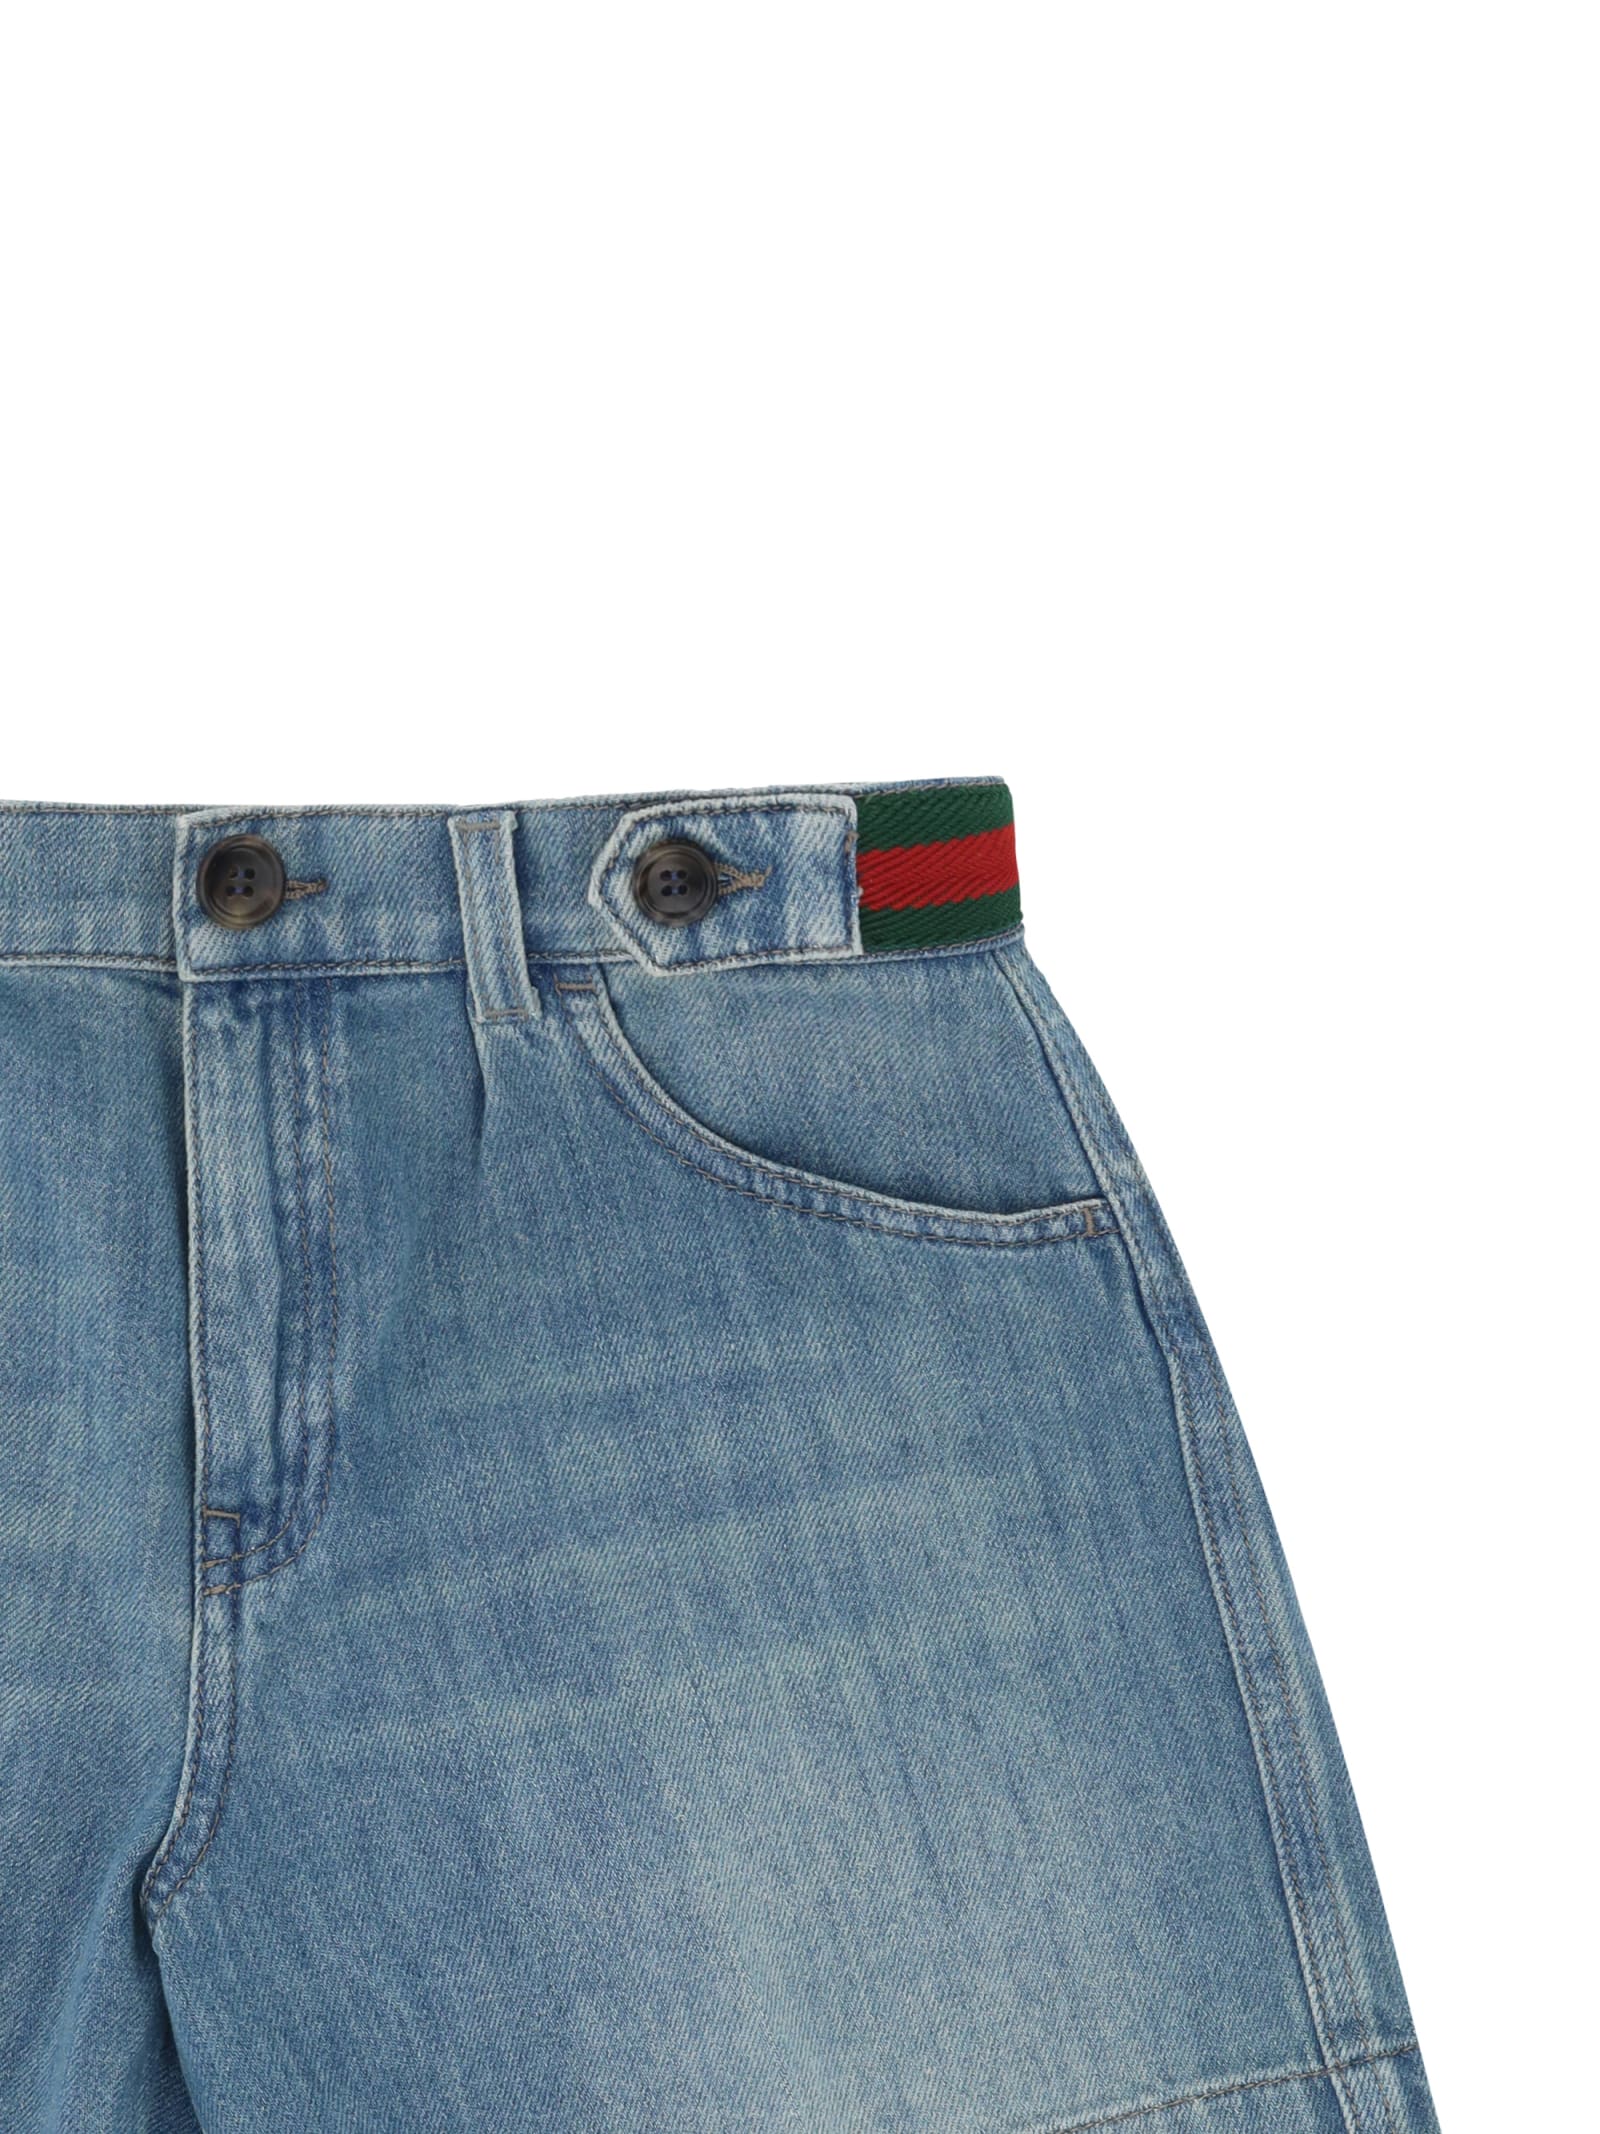 Shop Gucci Bermuda Shorts For Boy In Blue/mix